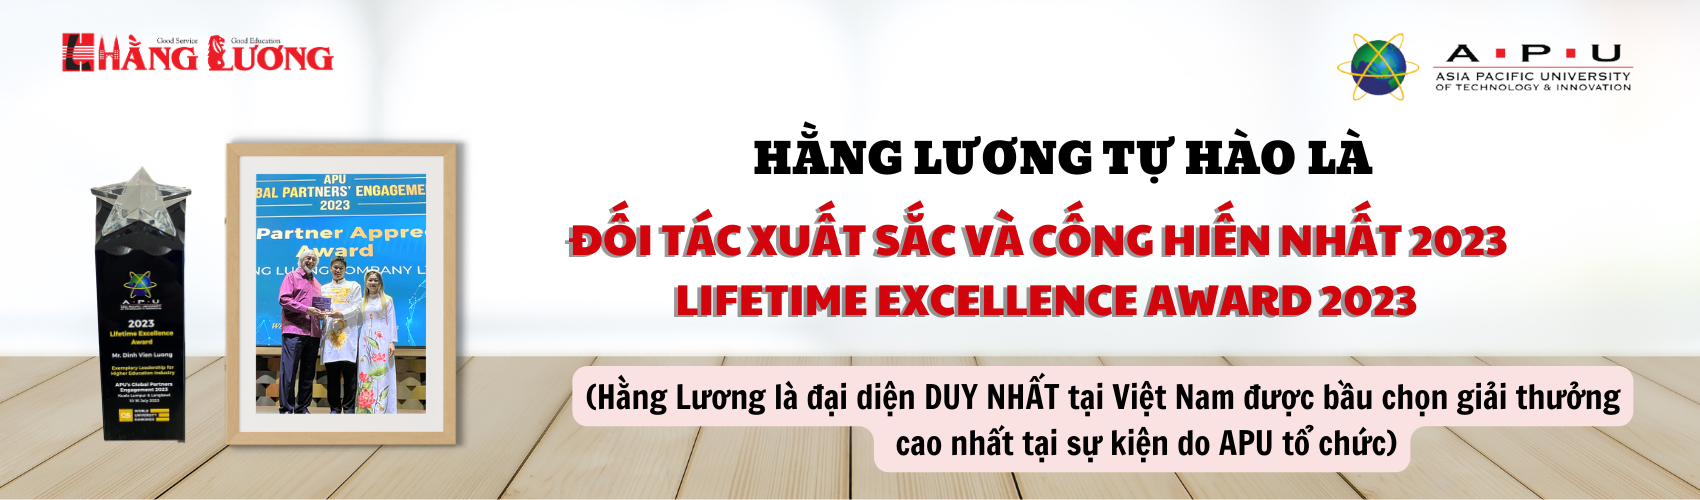 APU LIFE TIME EXCELLENCE AWARD HANG LUONG 2023